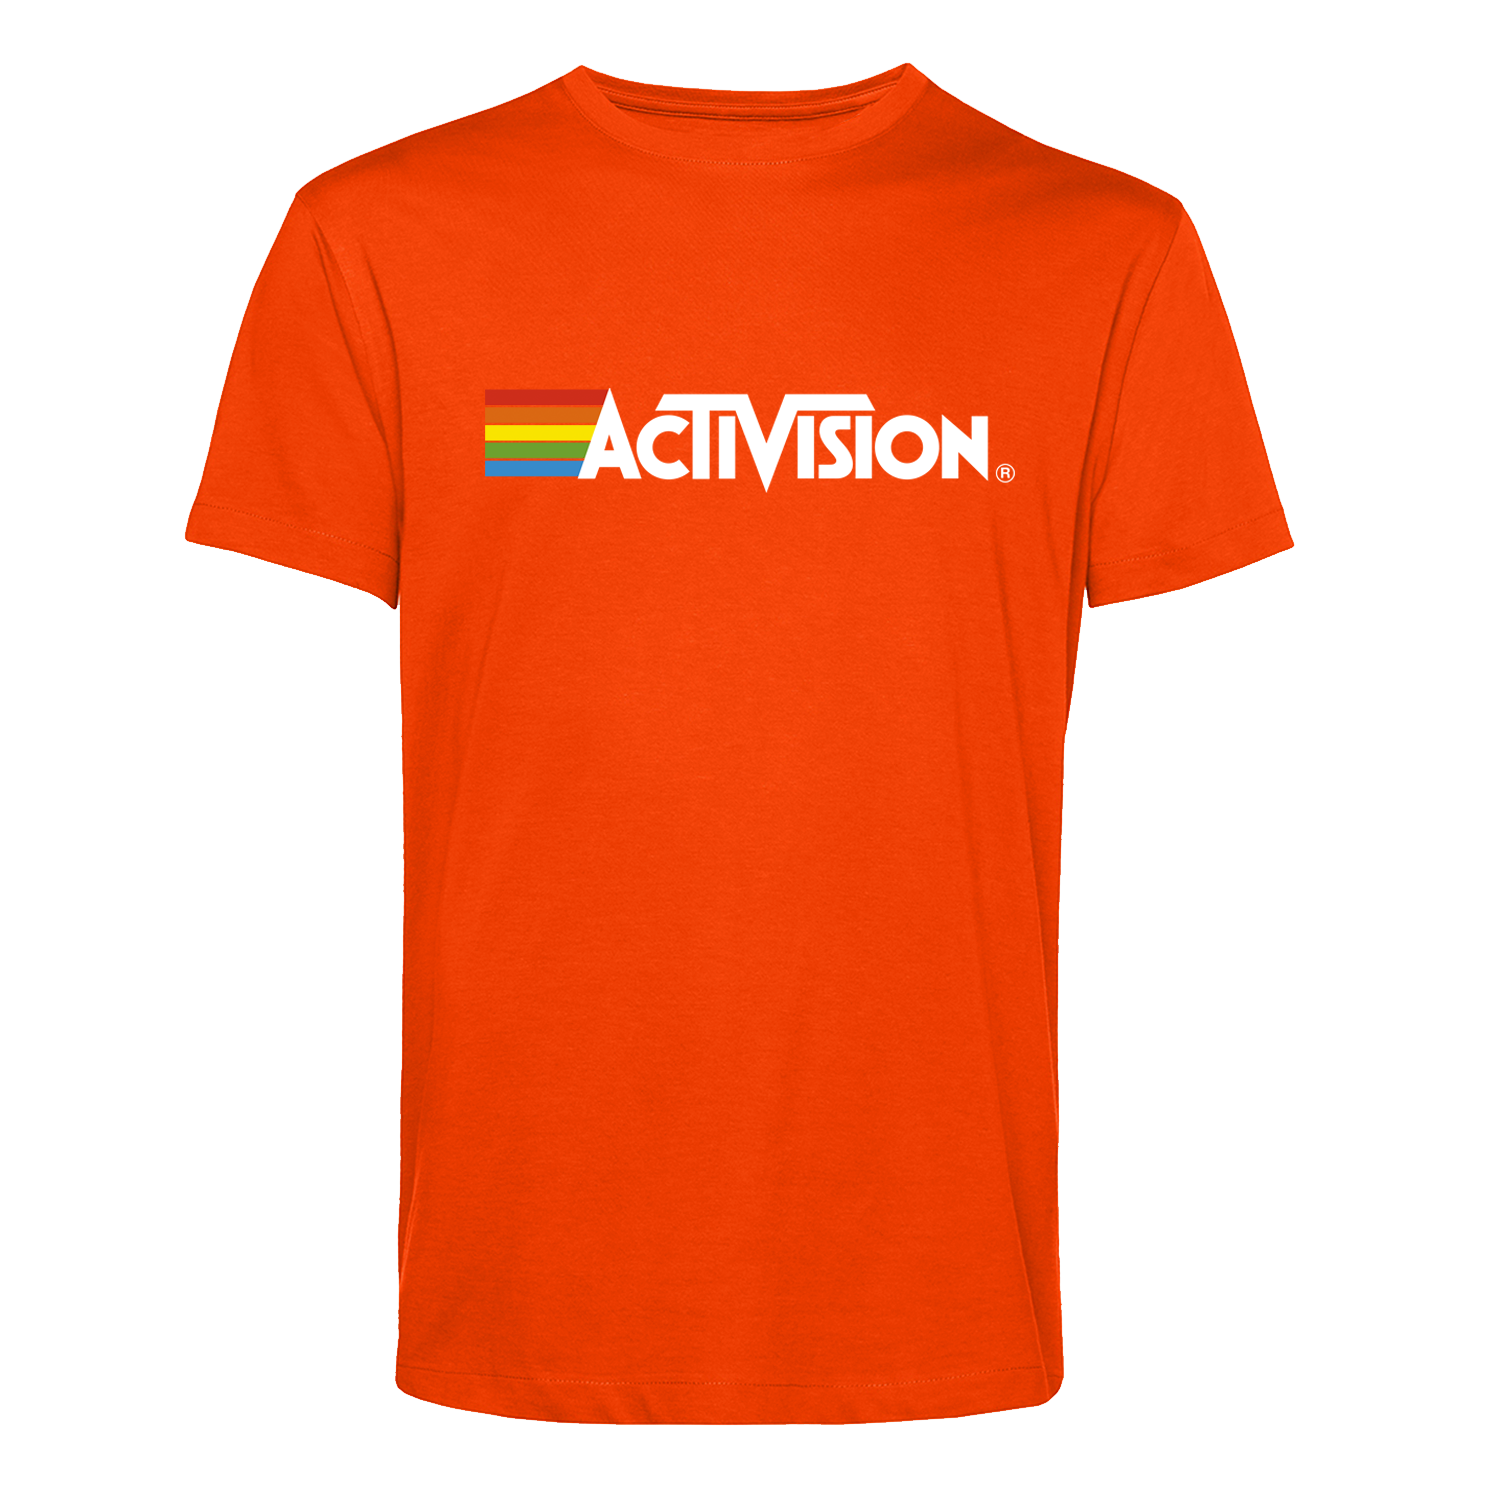 Activision Orange T-Shirt